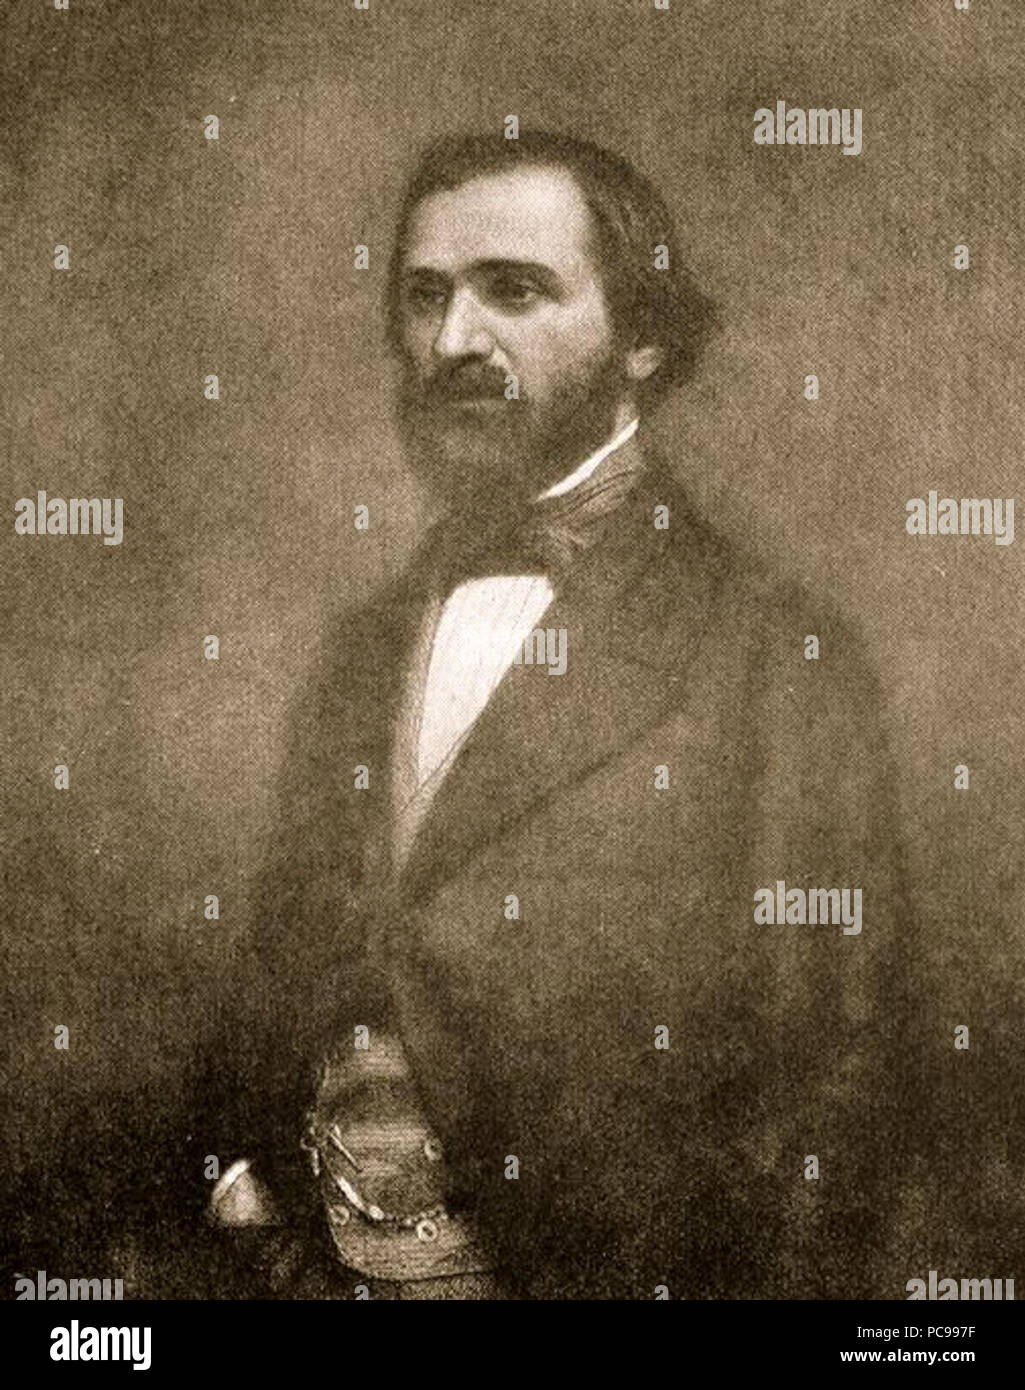 247 Giuseppe Verdi portrait Stock Photo